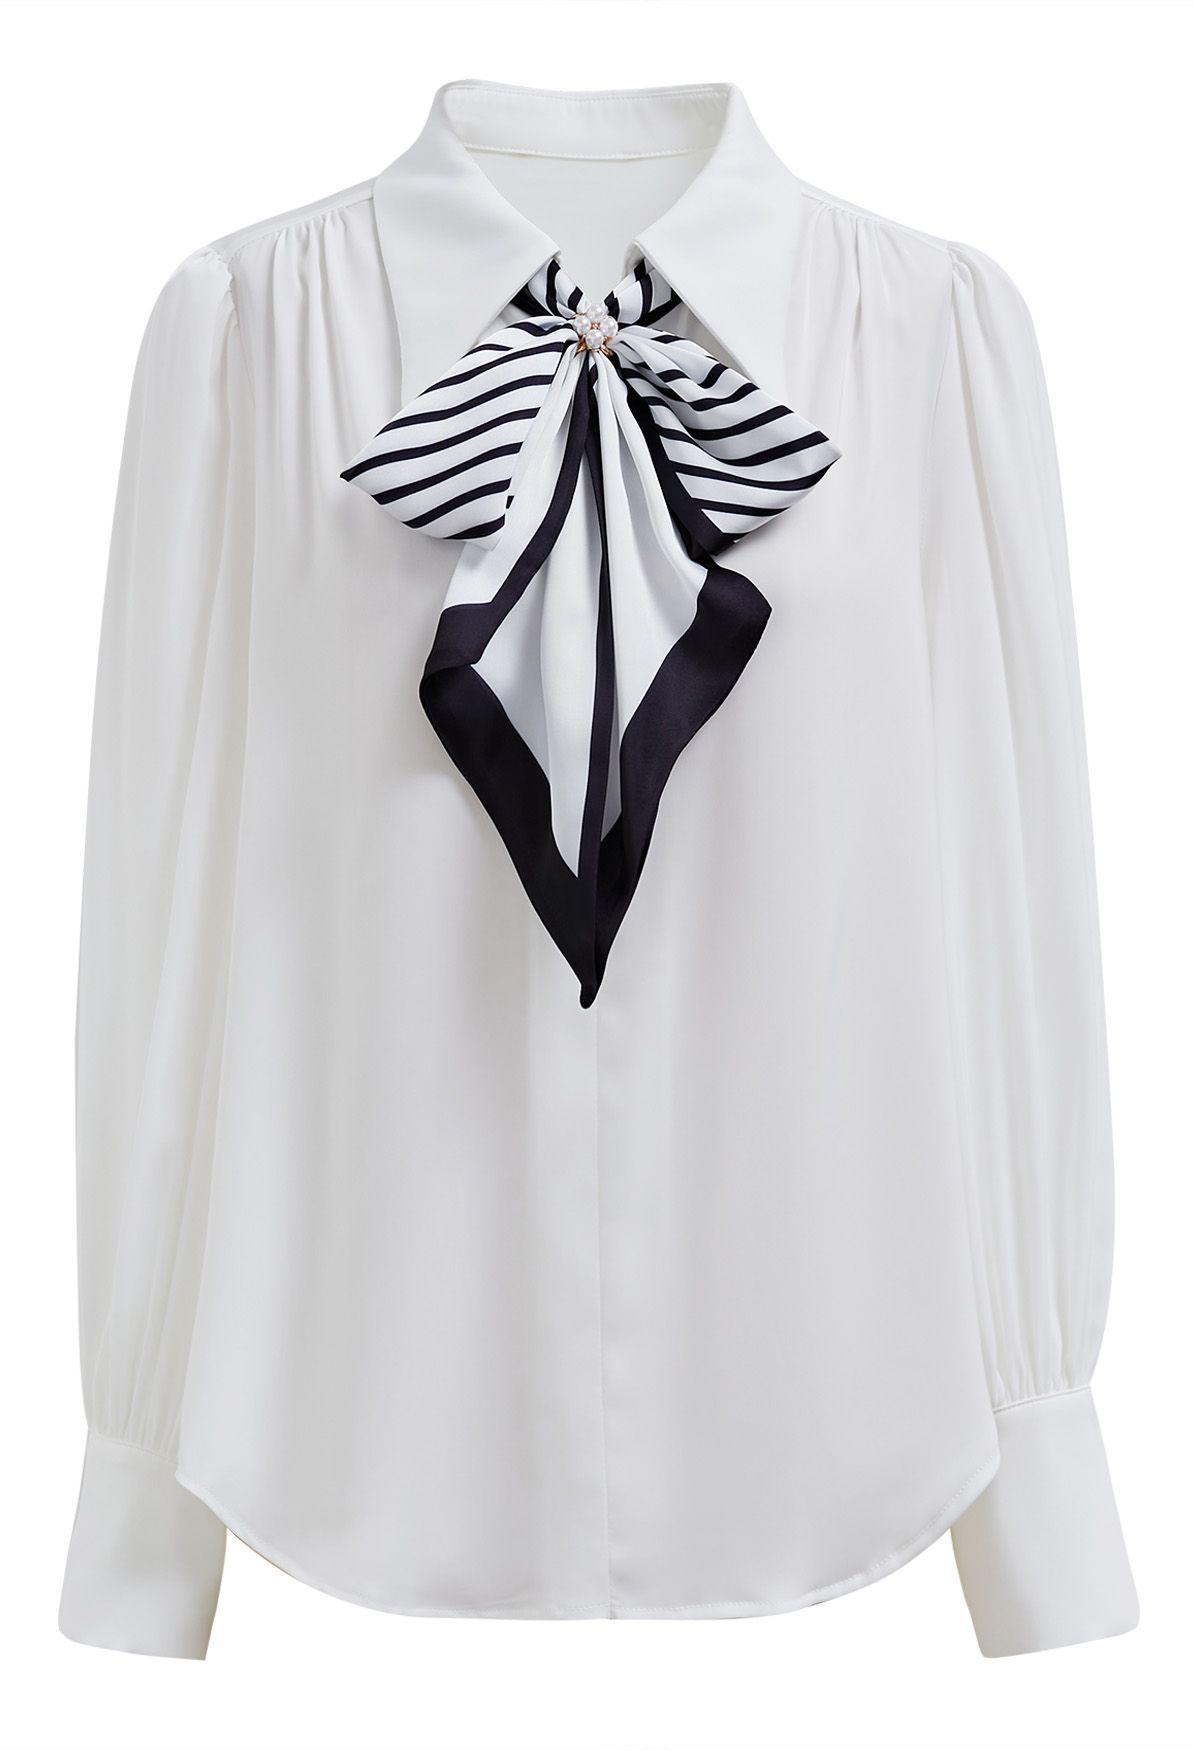 Vogue Detachable Bowknot Satin Shirt in White